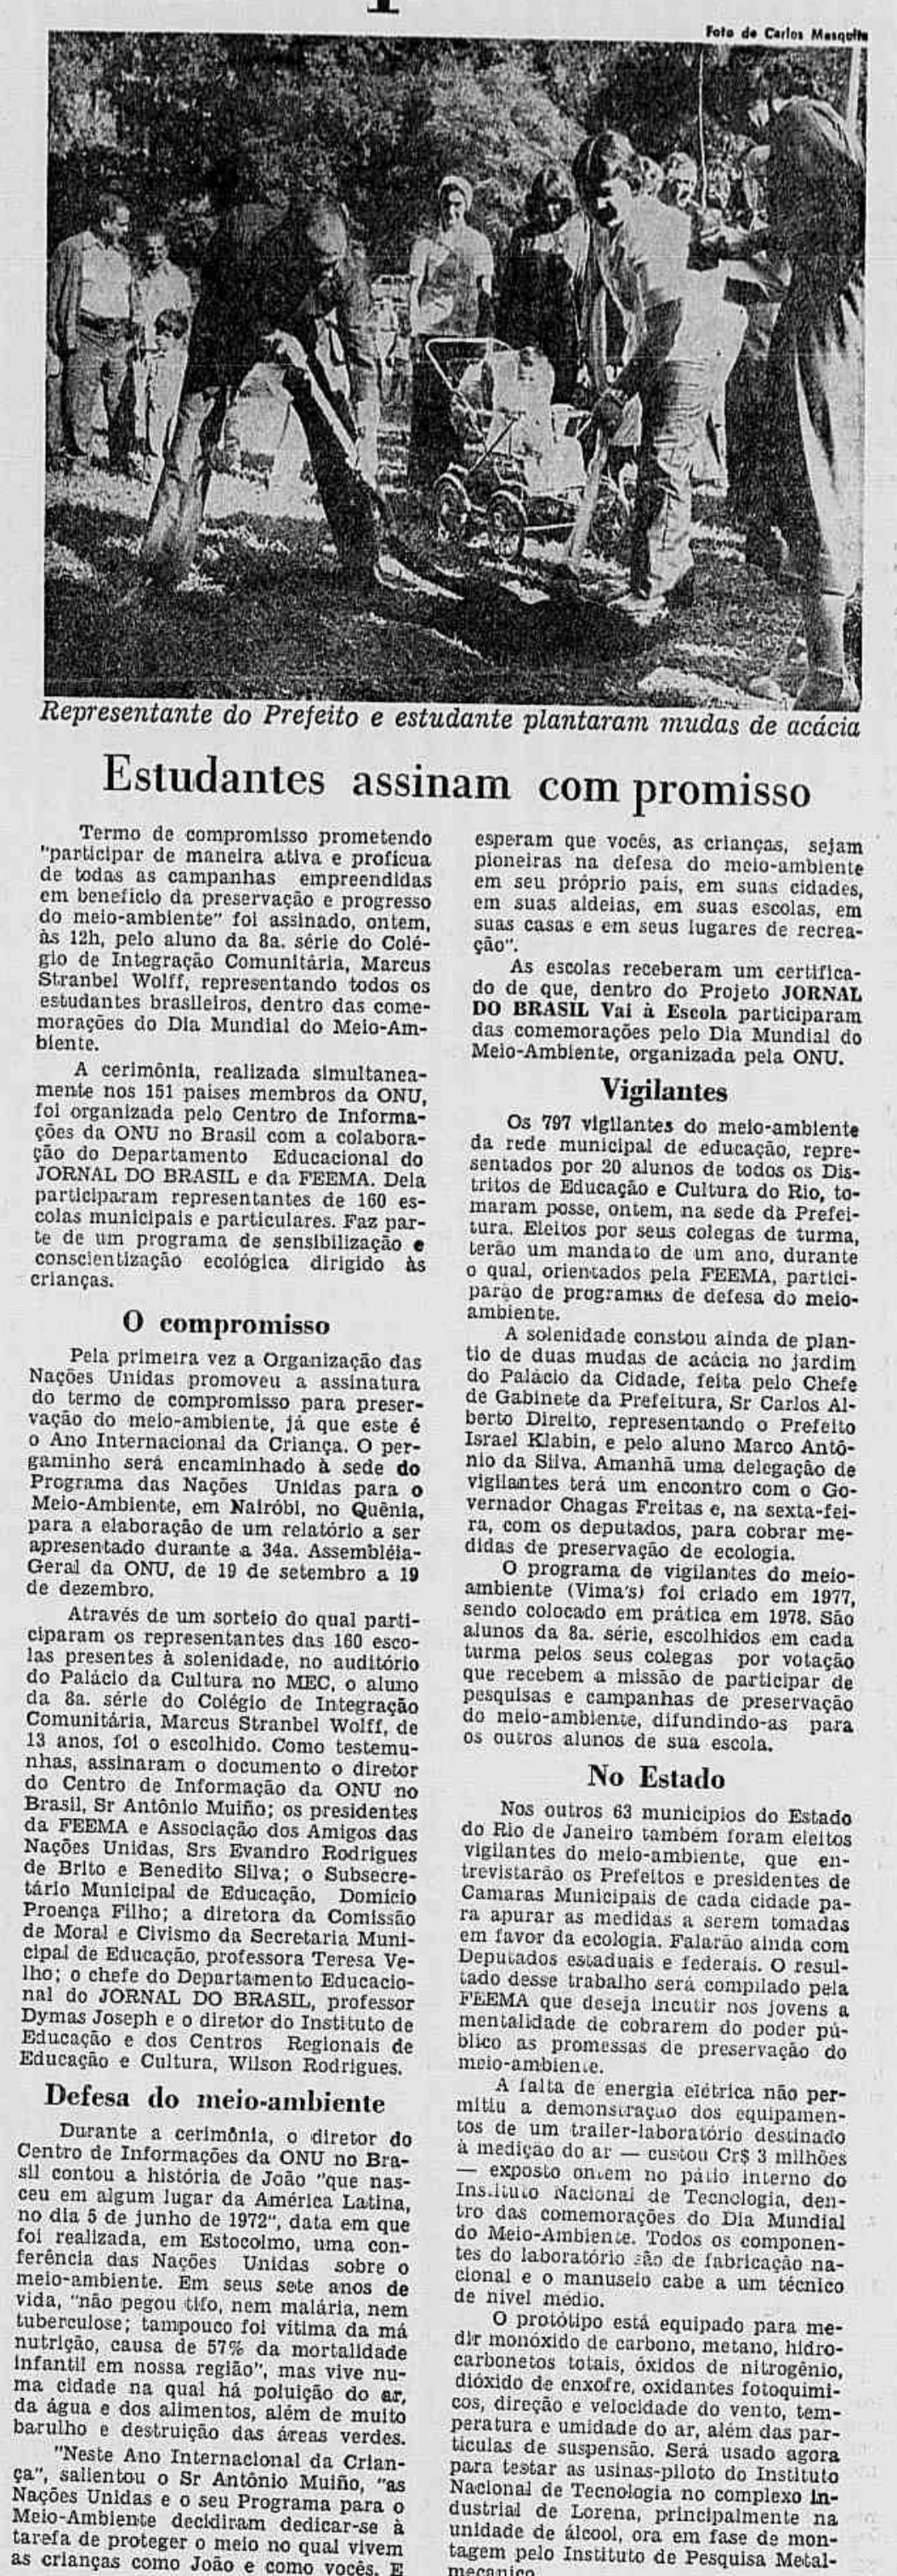 Jornal do Brasil - 6 de junho de 1979